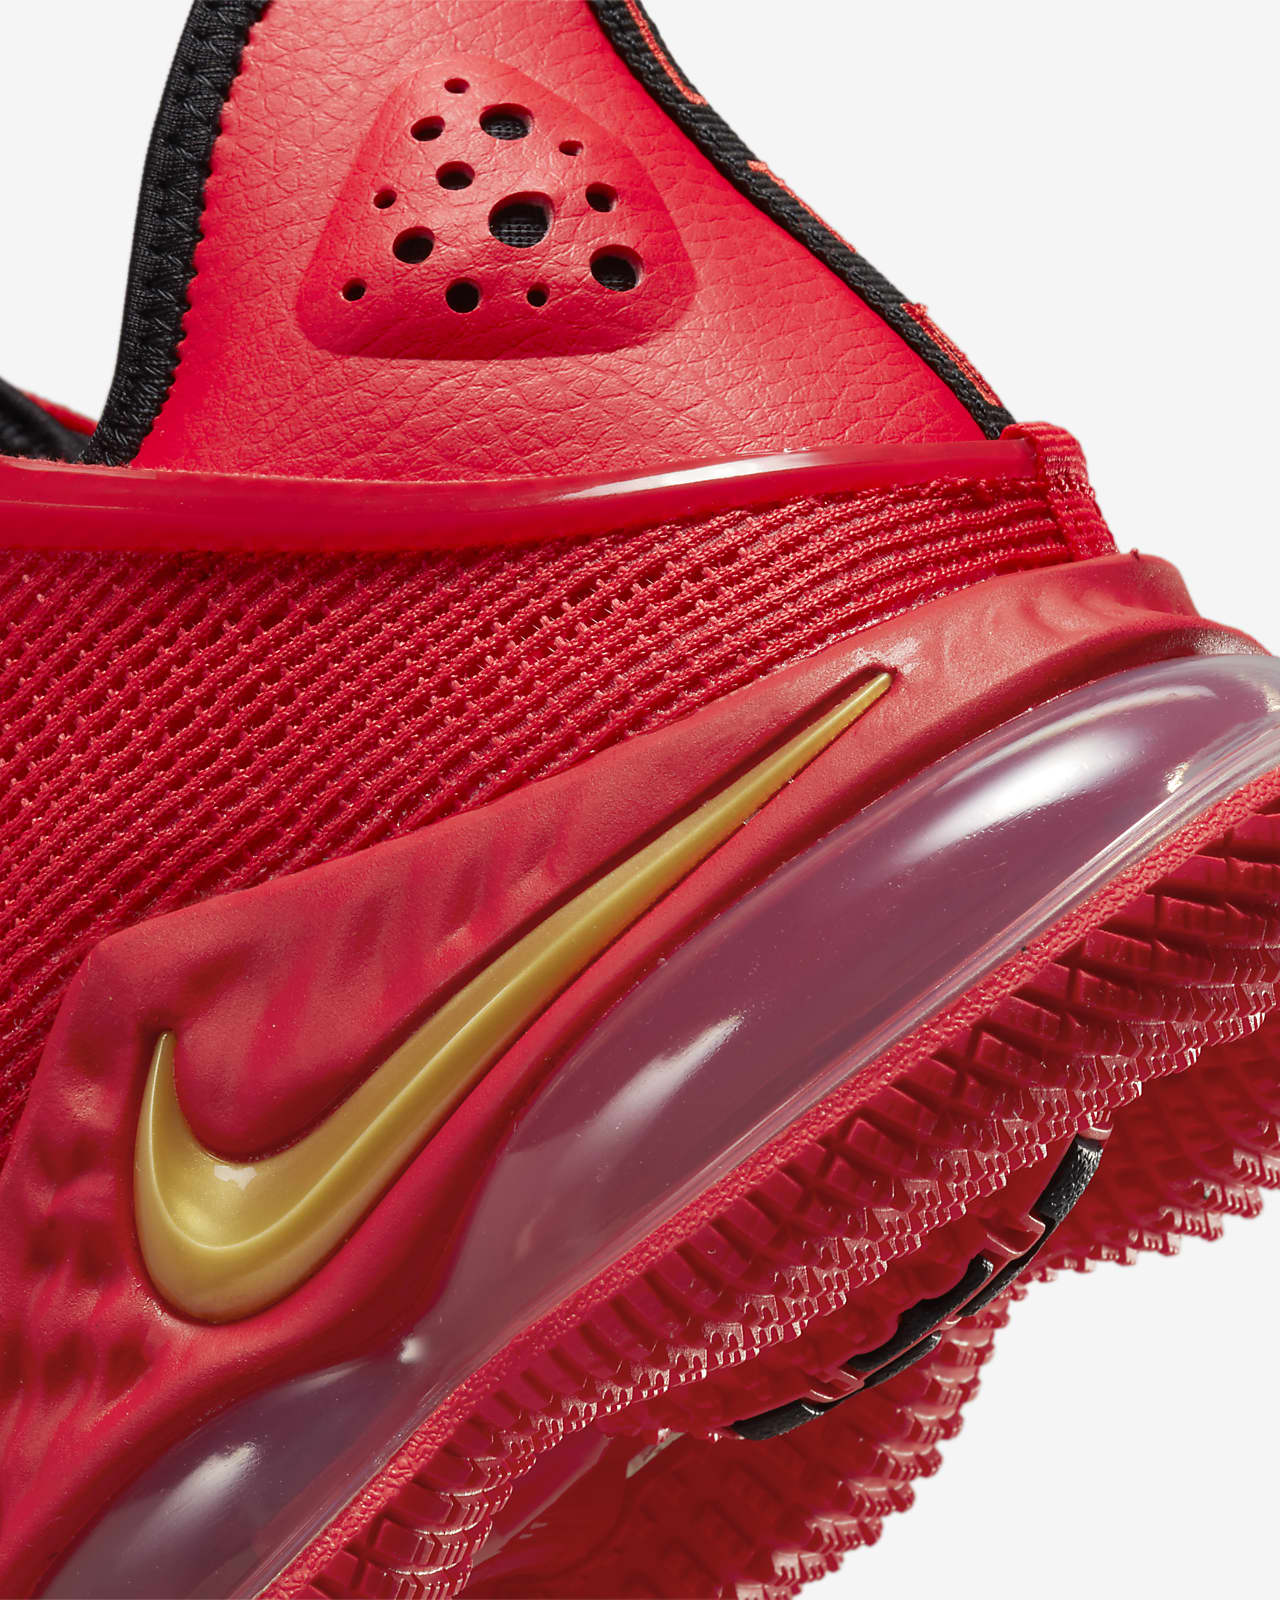 Nike Lebron 17 Colorways - 19 Styles